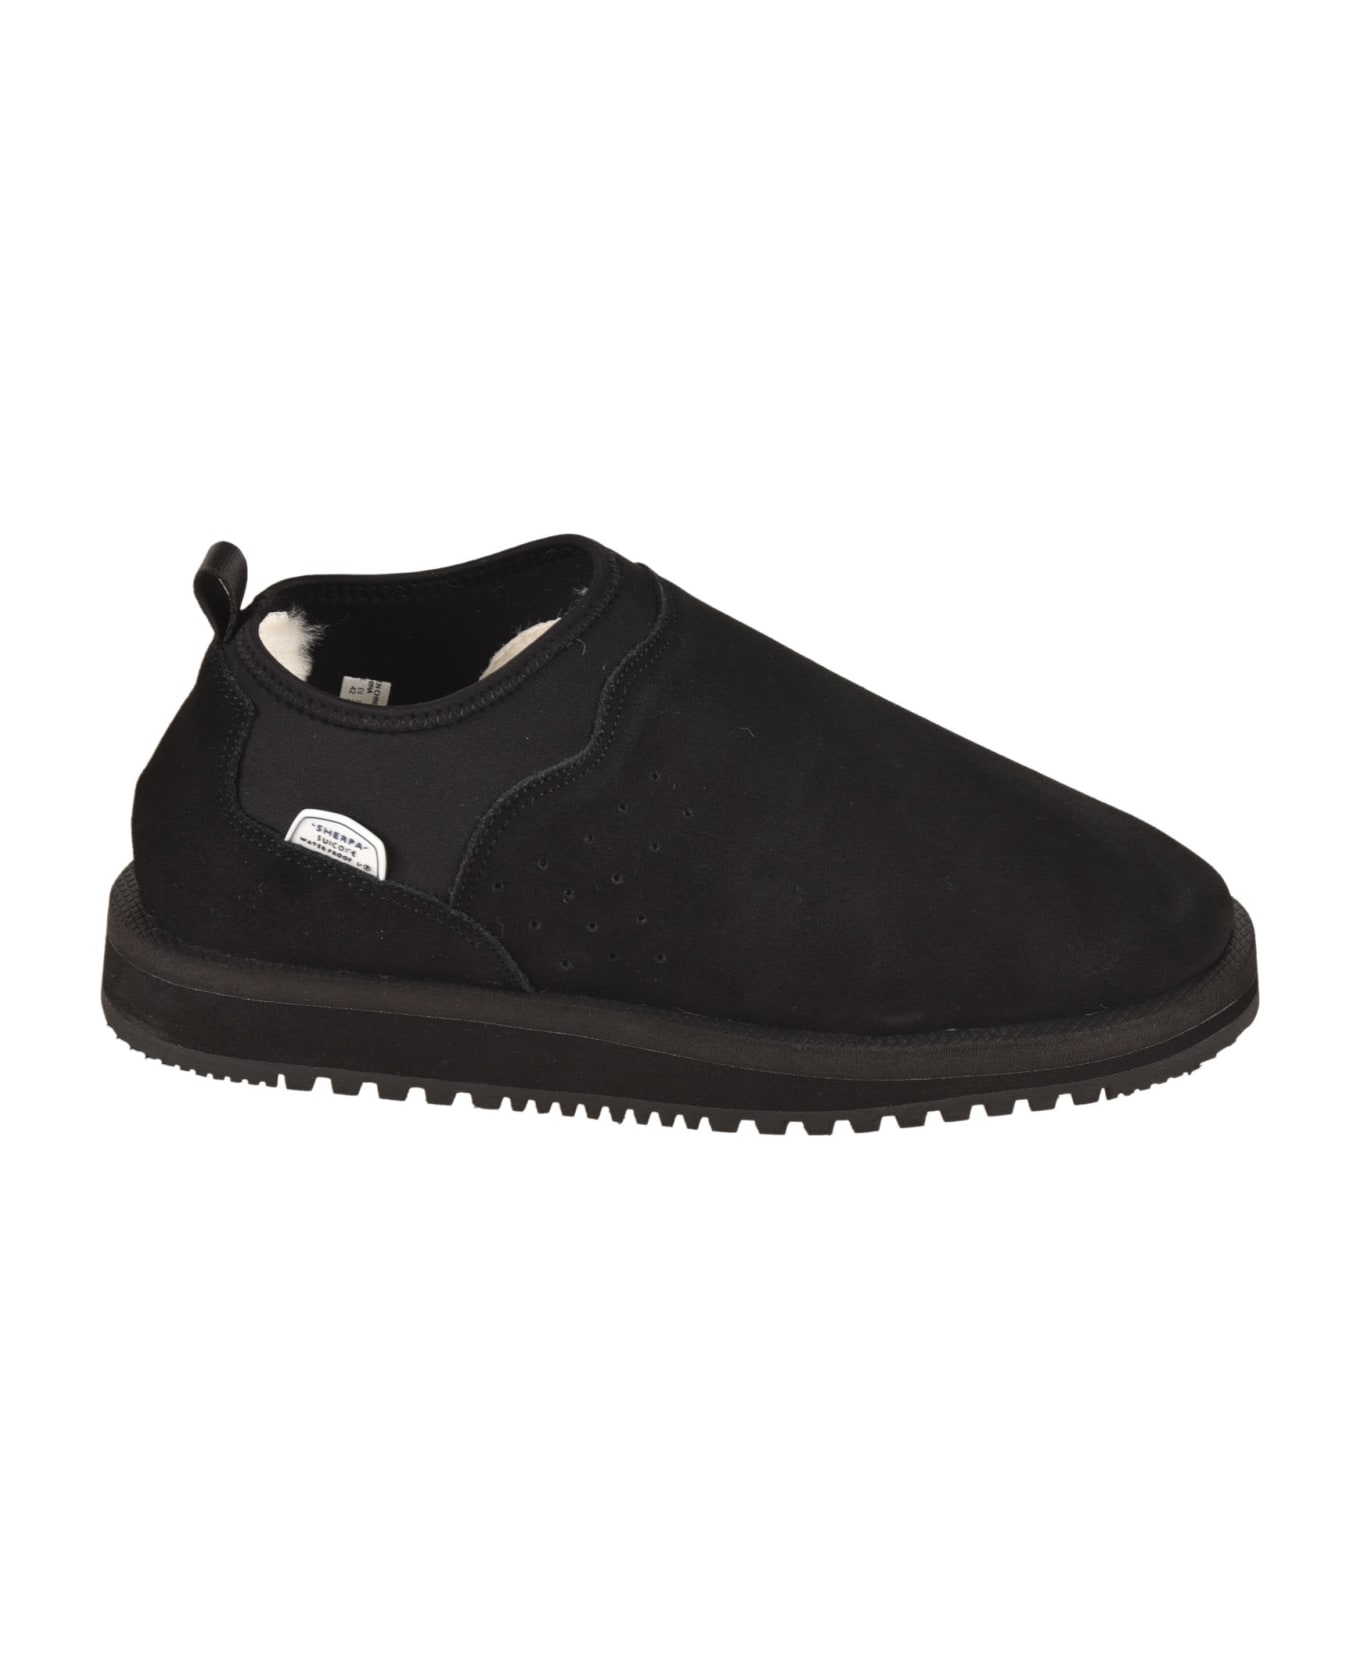 SUICOKE Fur Applique Slip-on Sneakers - Black